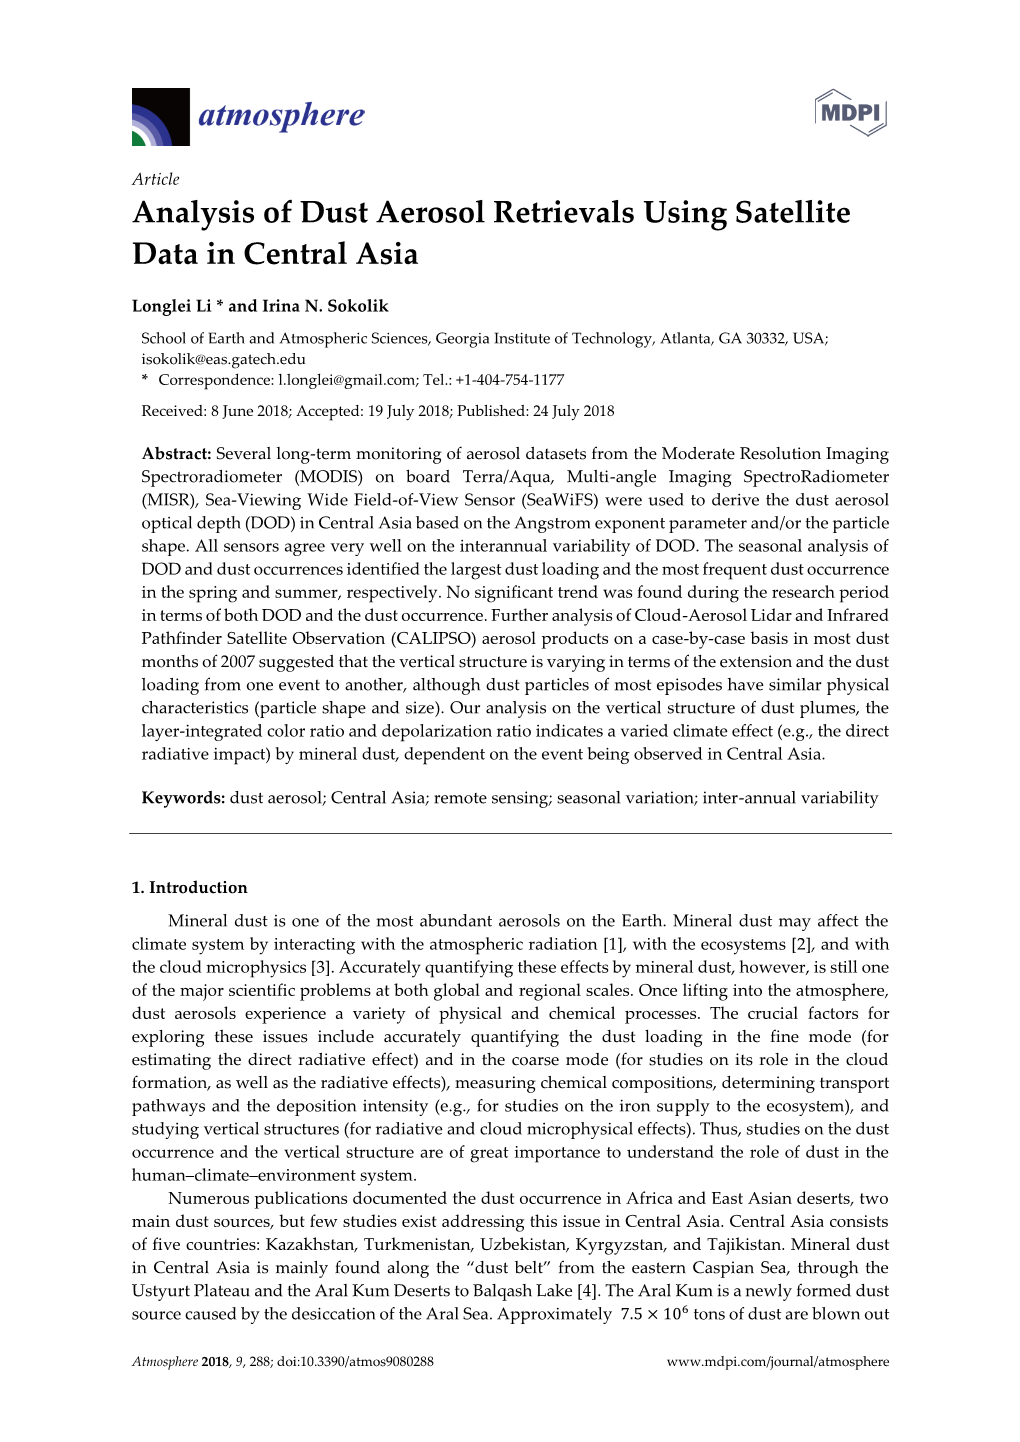 Analysis of Dust Aerosol Retrievals Using Satellite Data in Central Asia